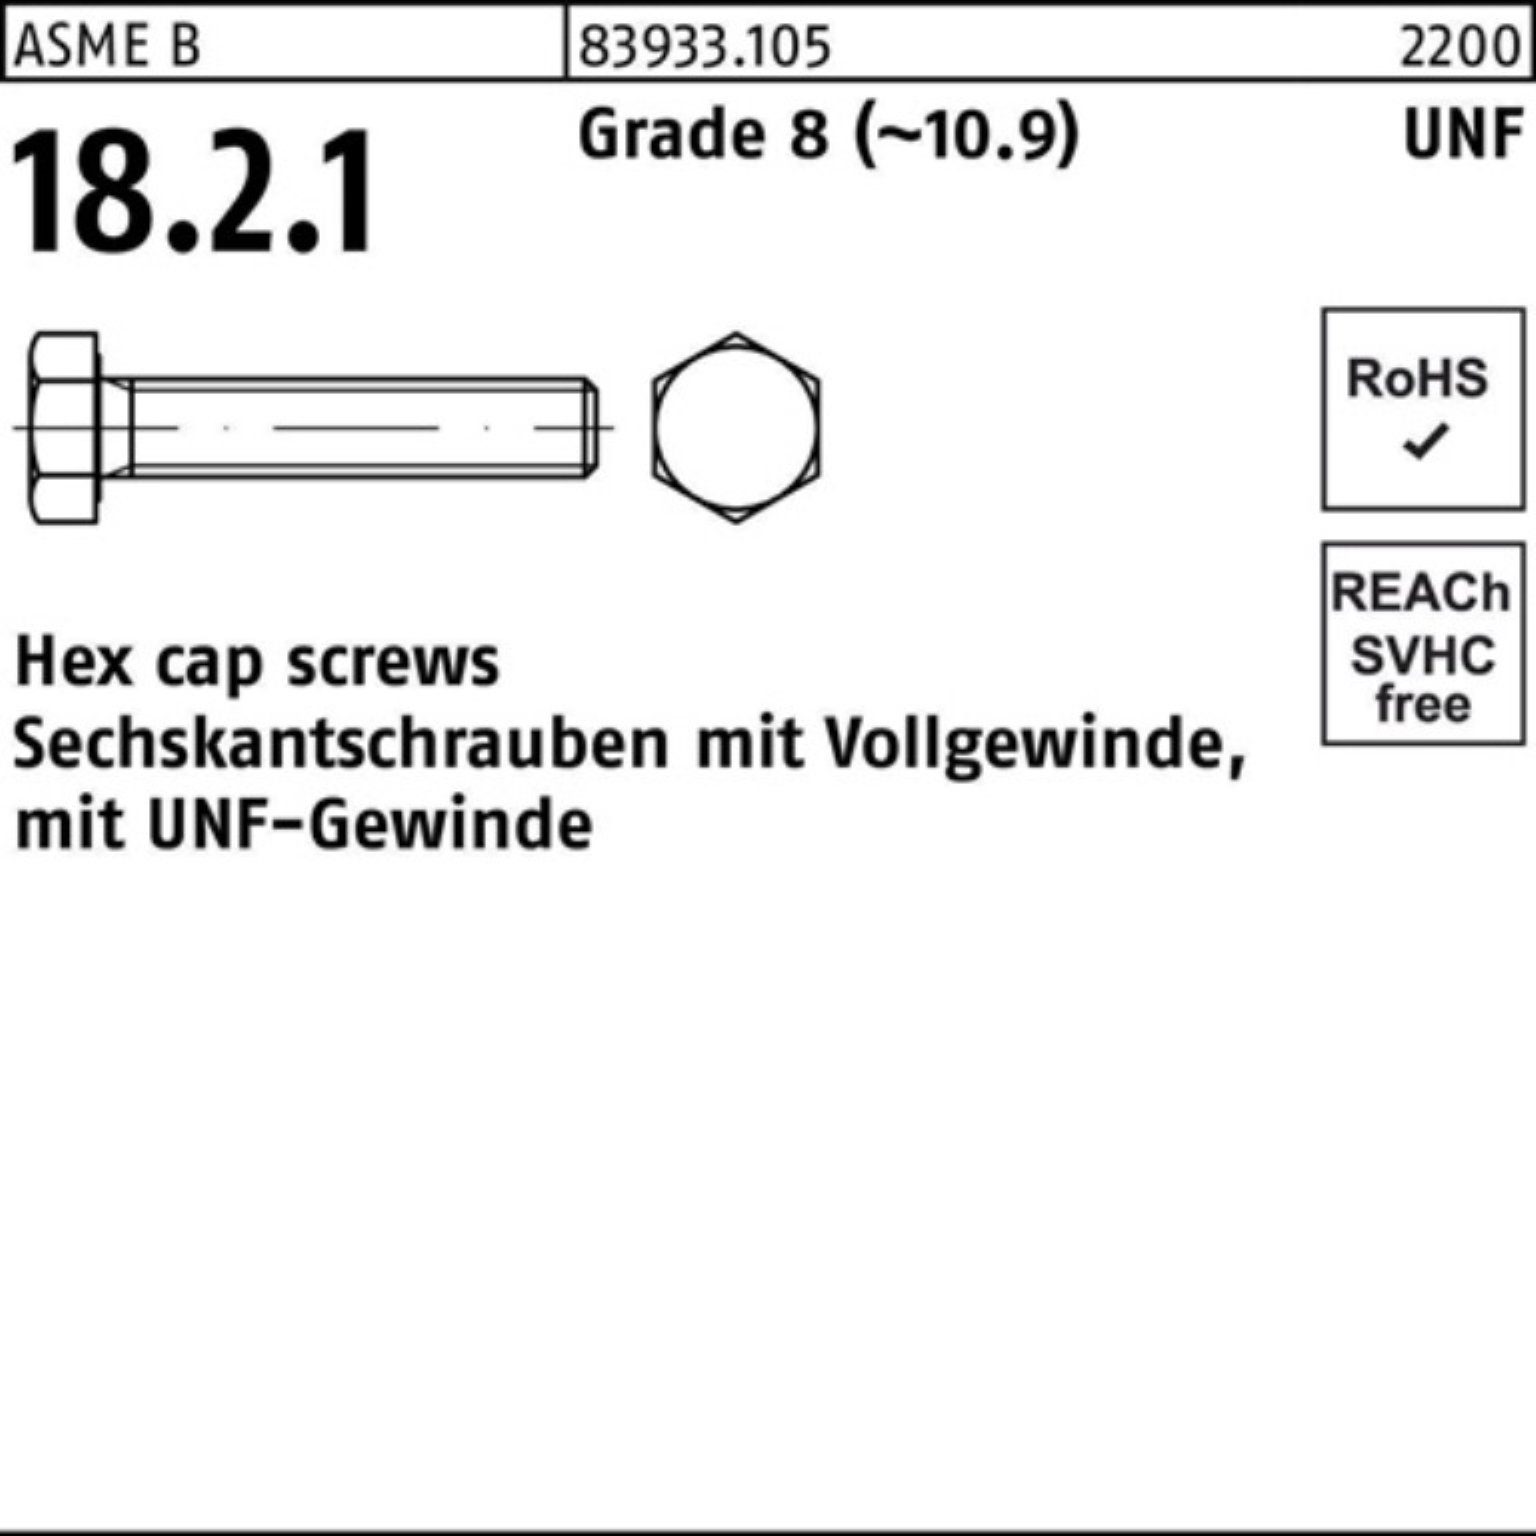 Reyher Sechskantschraube 100er Pack Sechskantschraube R 83933 UNF-Gewinde VG 5/16x 3/4 Grade 8